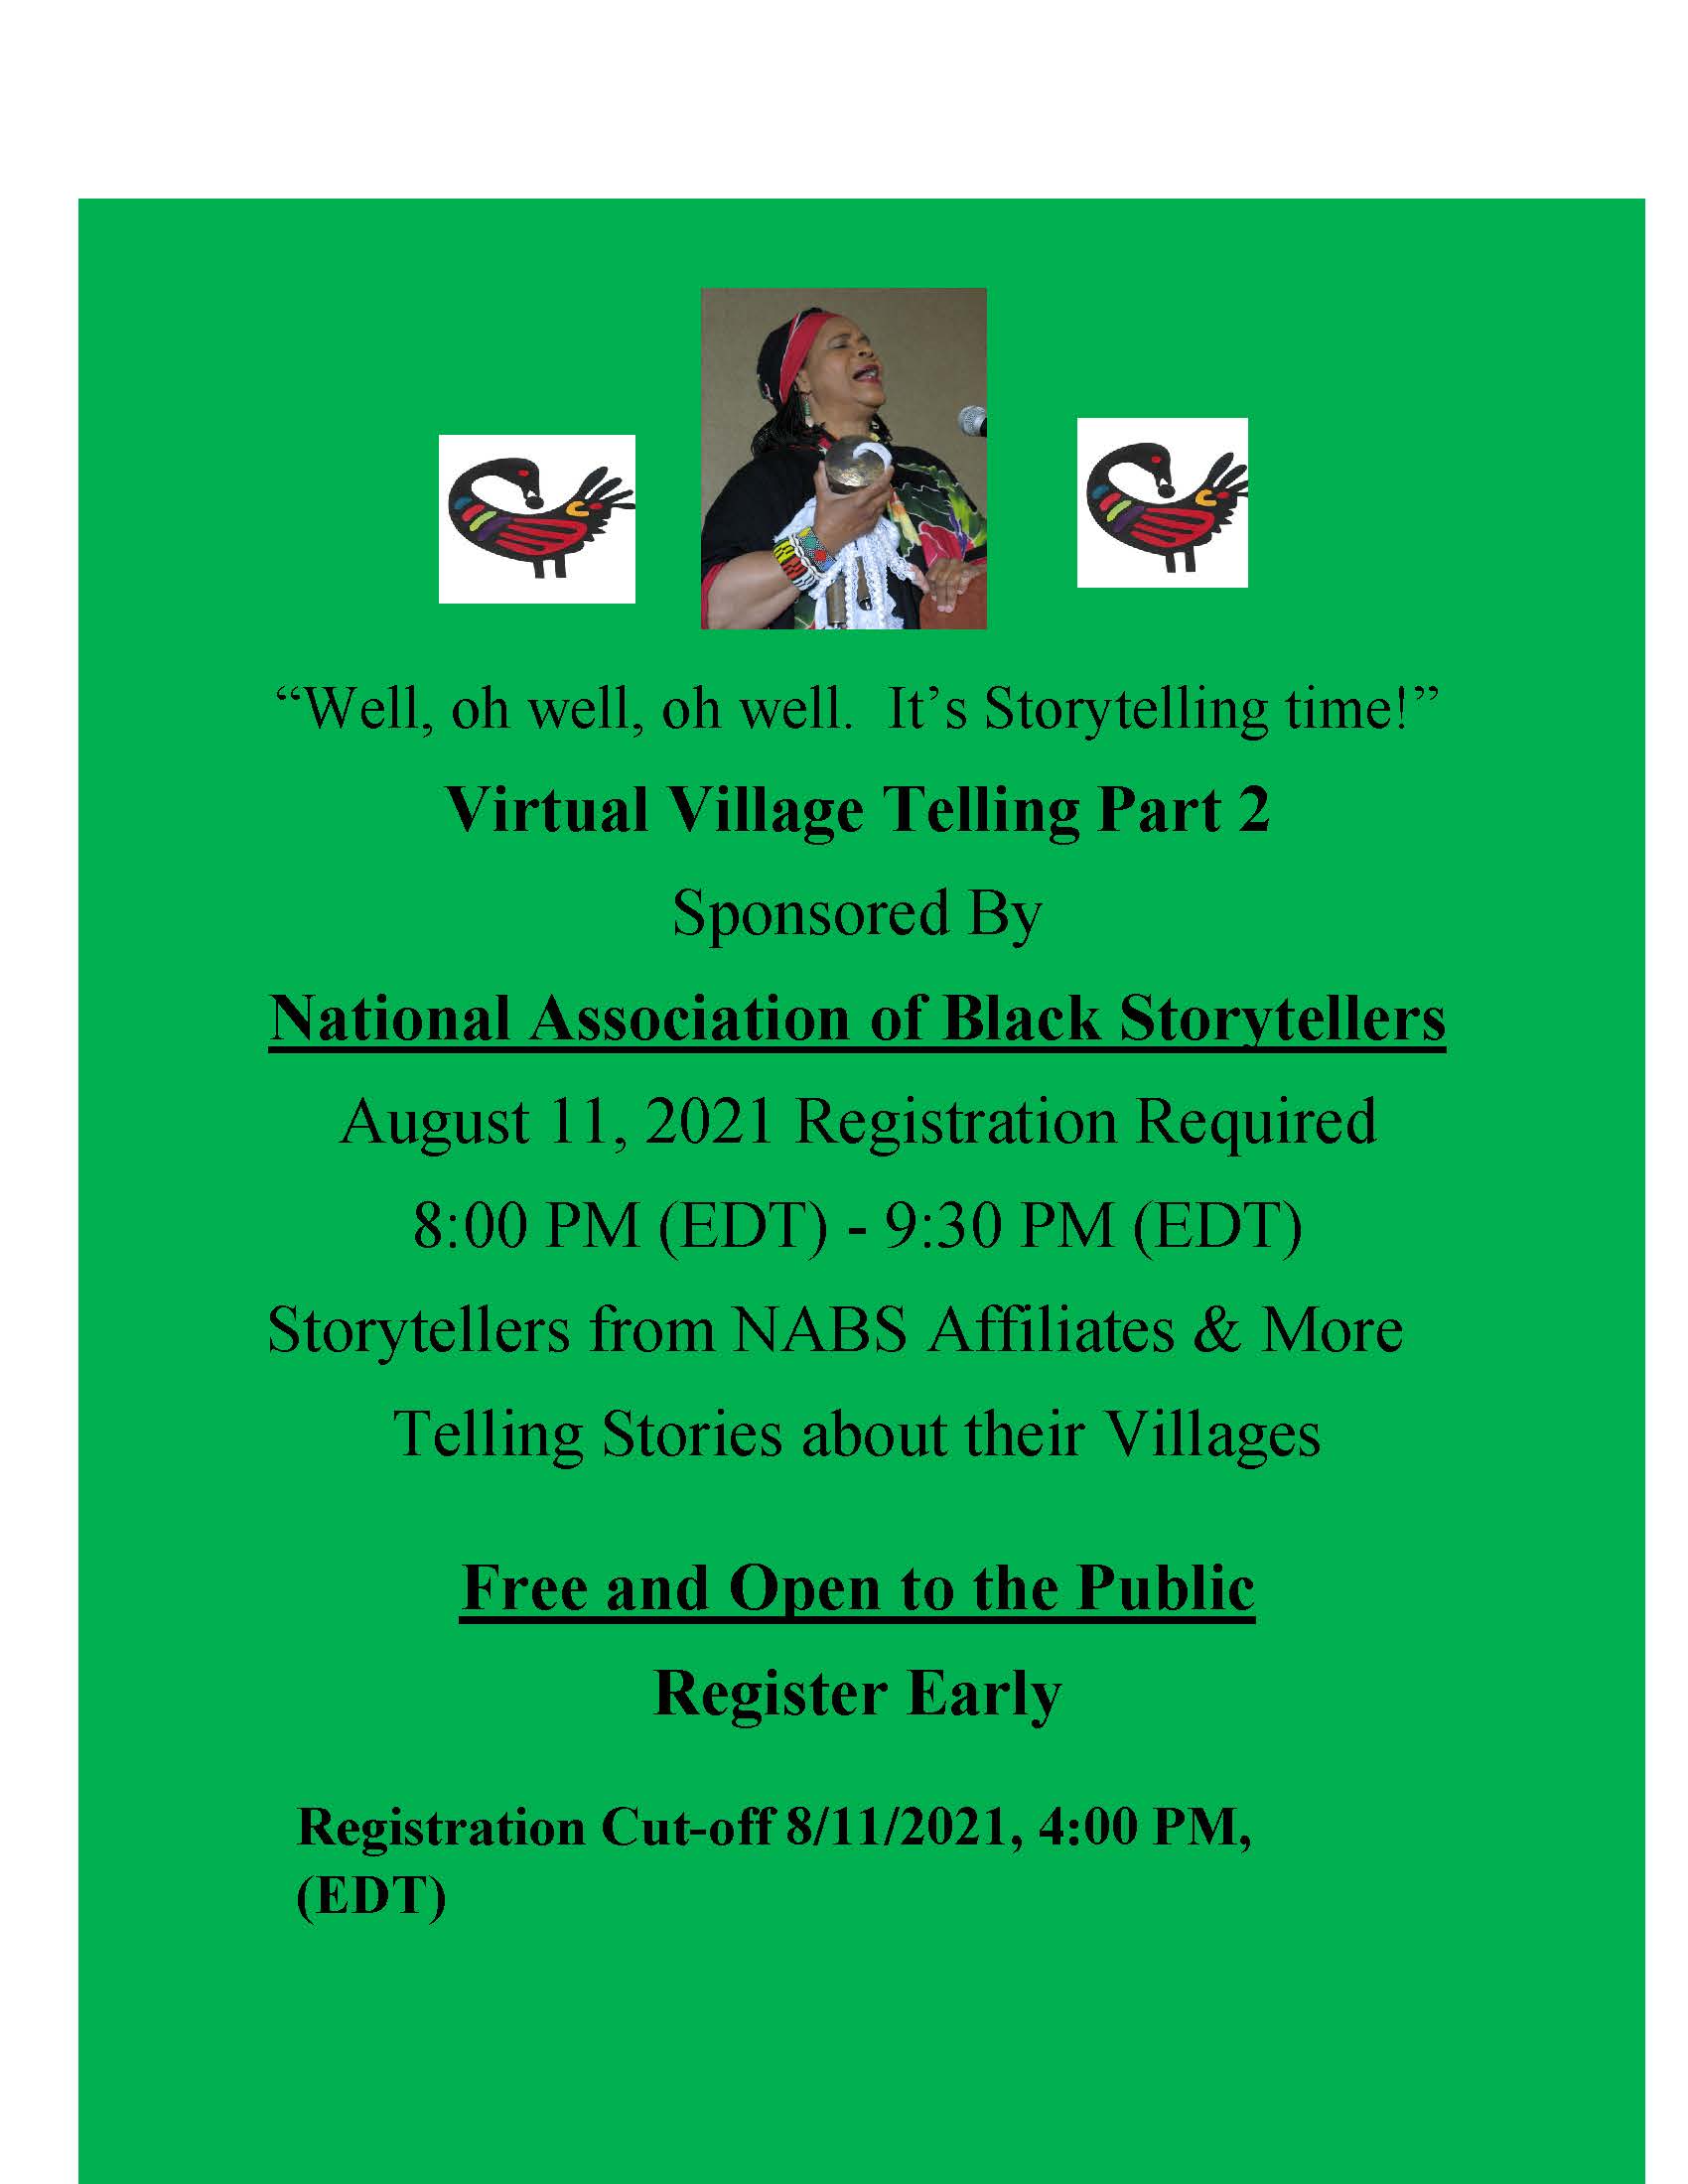 National Association of Black Storytellers